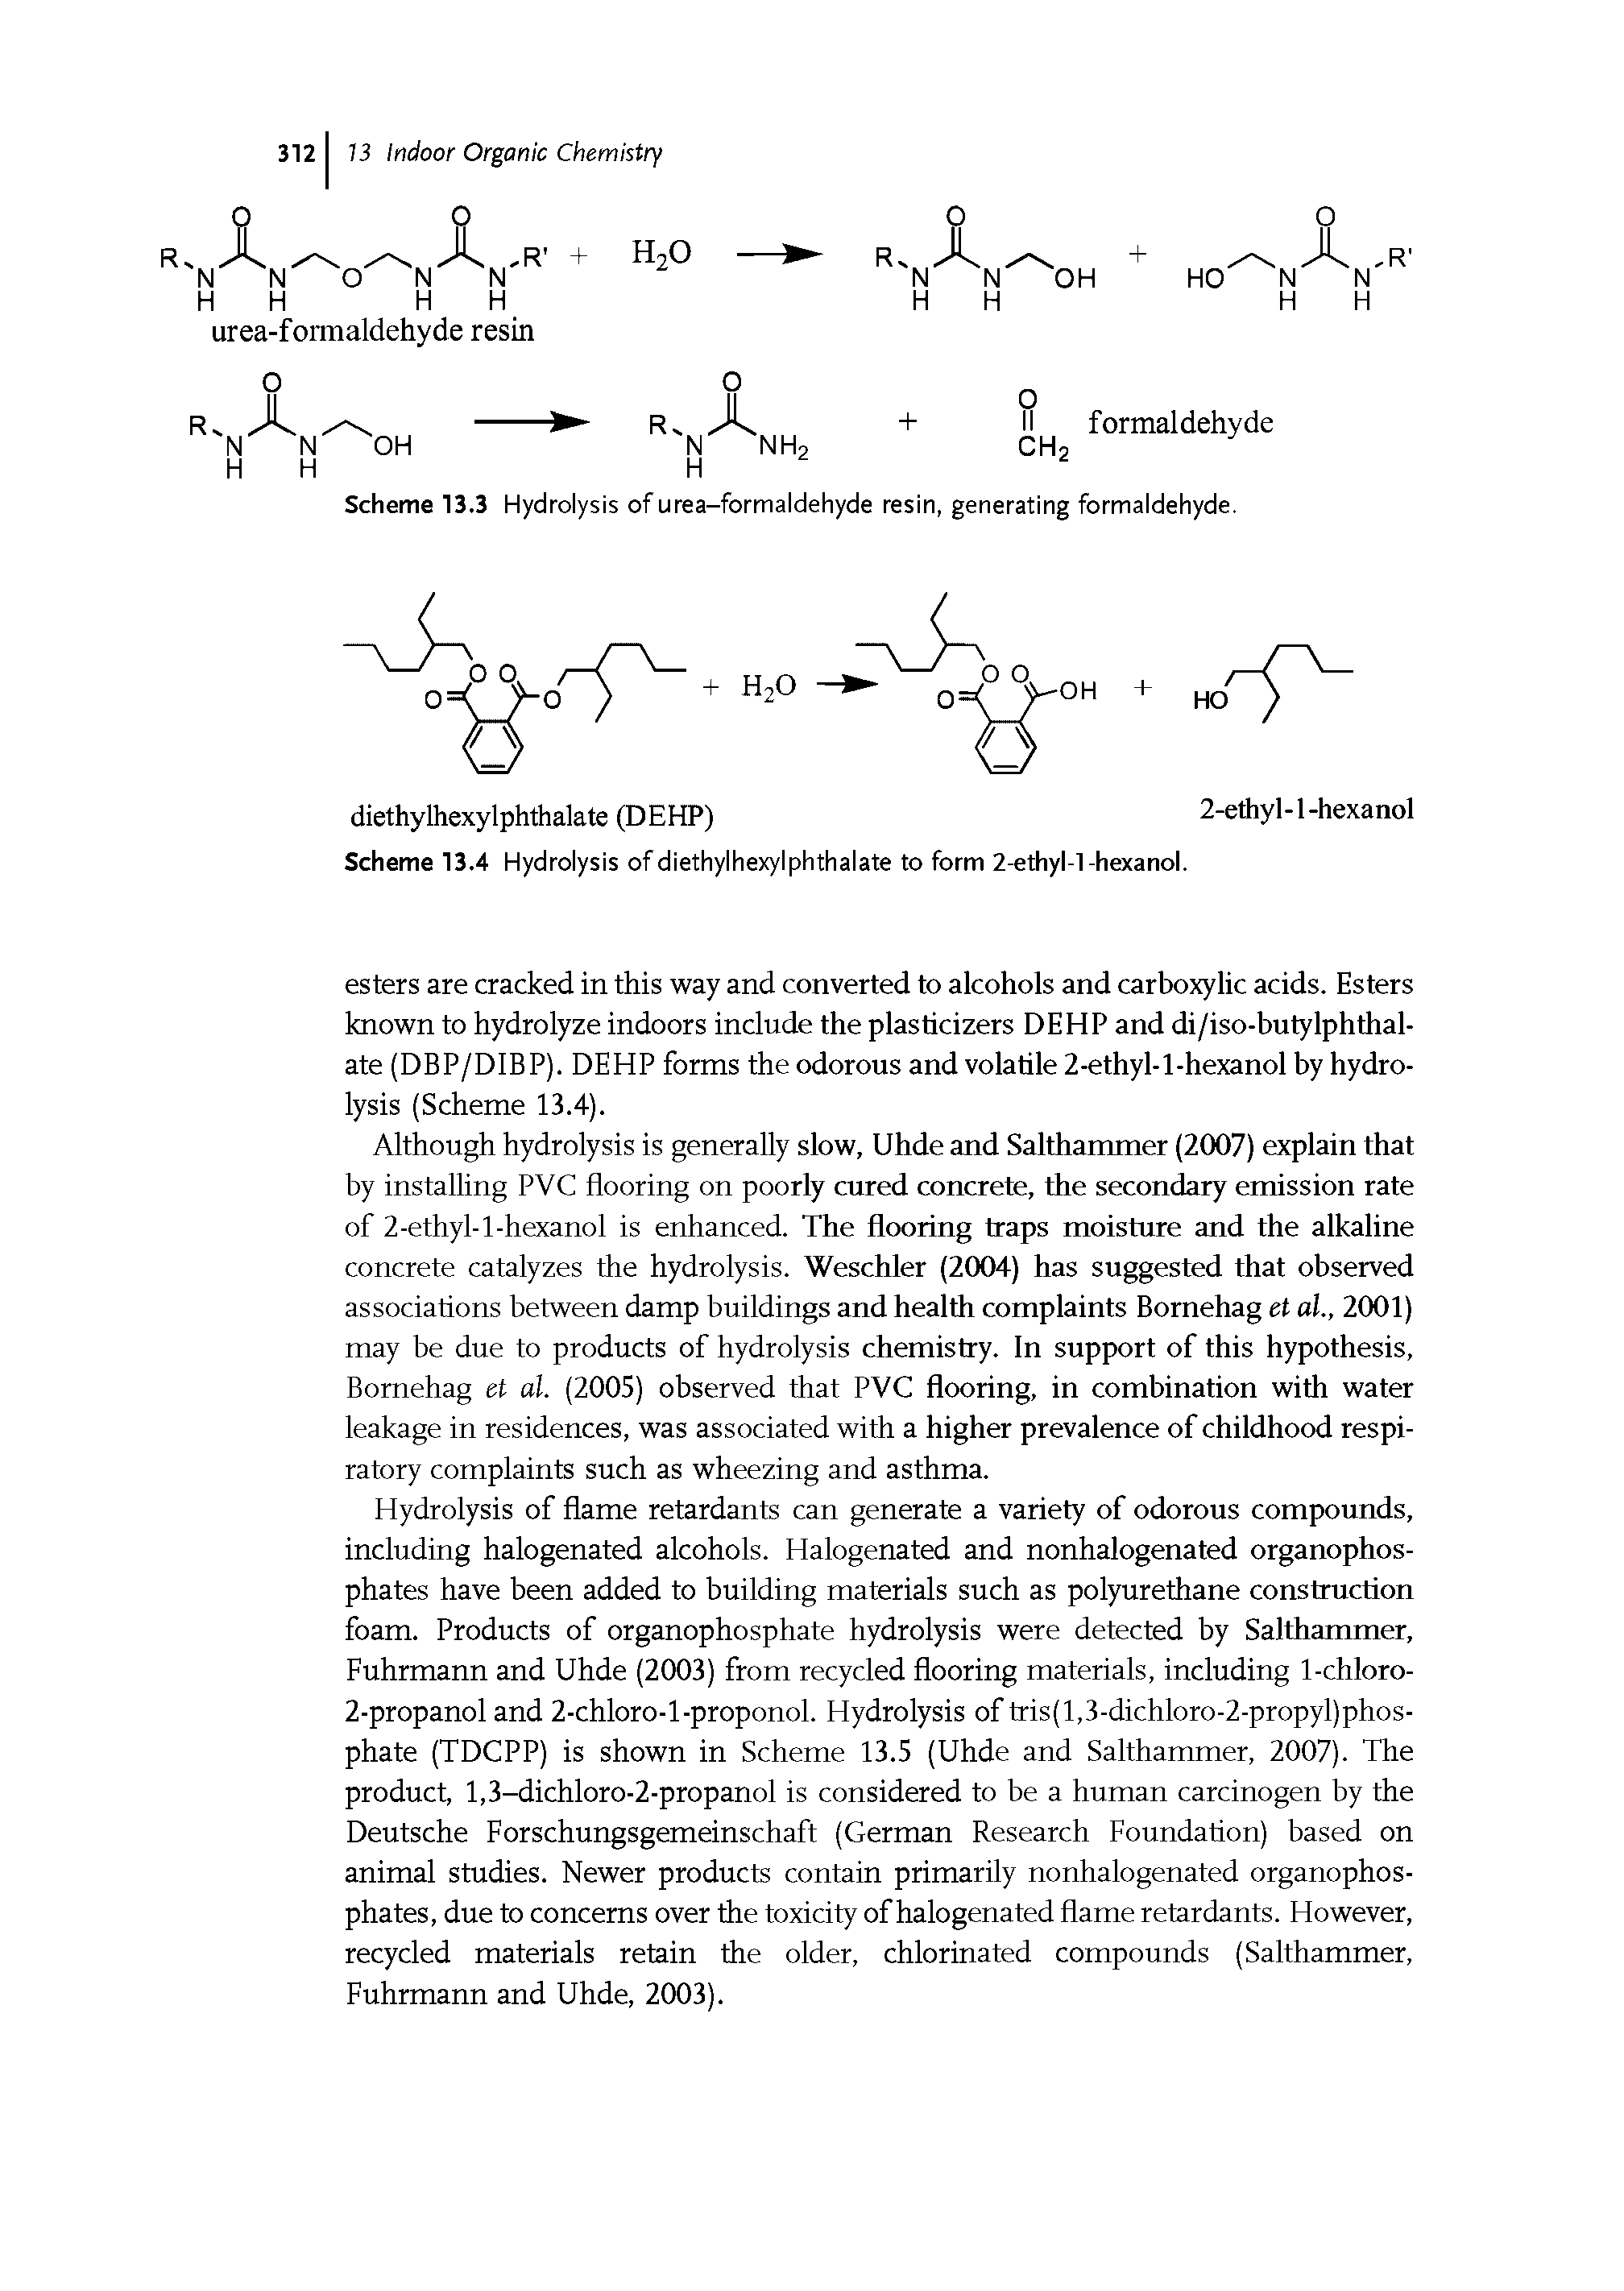 Scheme 13.3 Hydrolysis of urea-formaldehyde resin, generating formaldehyde.